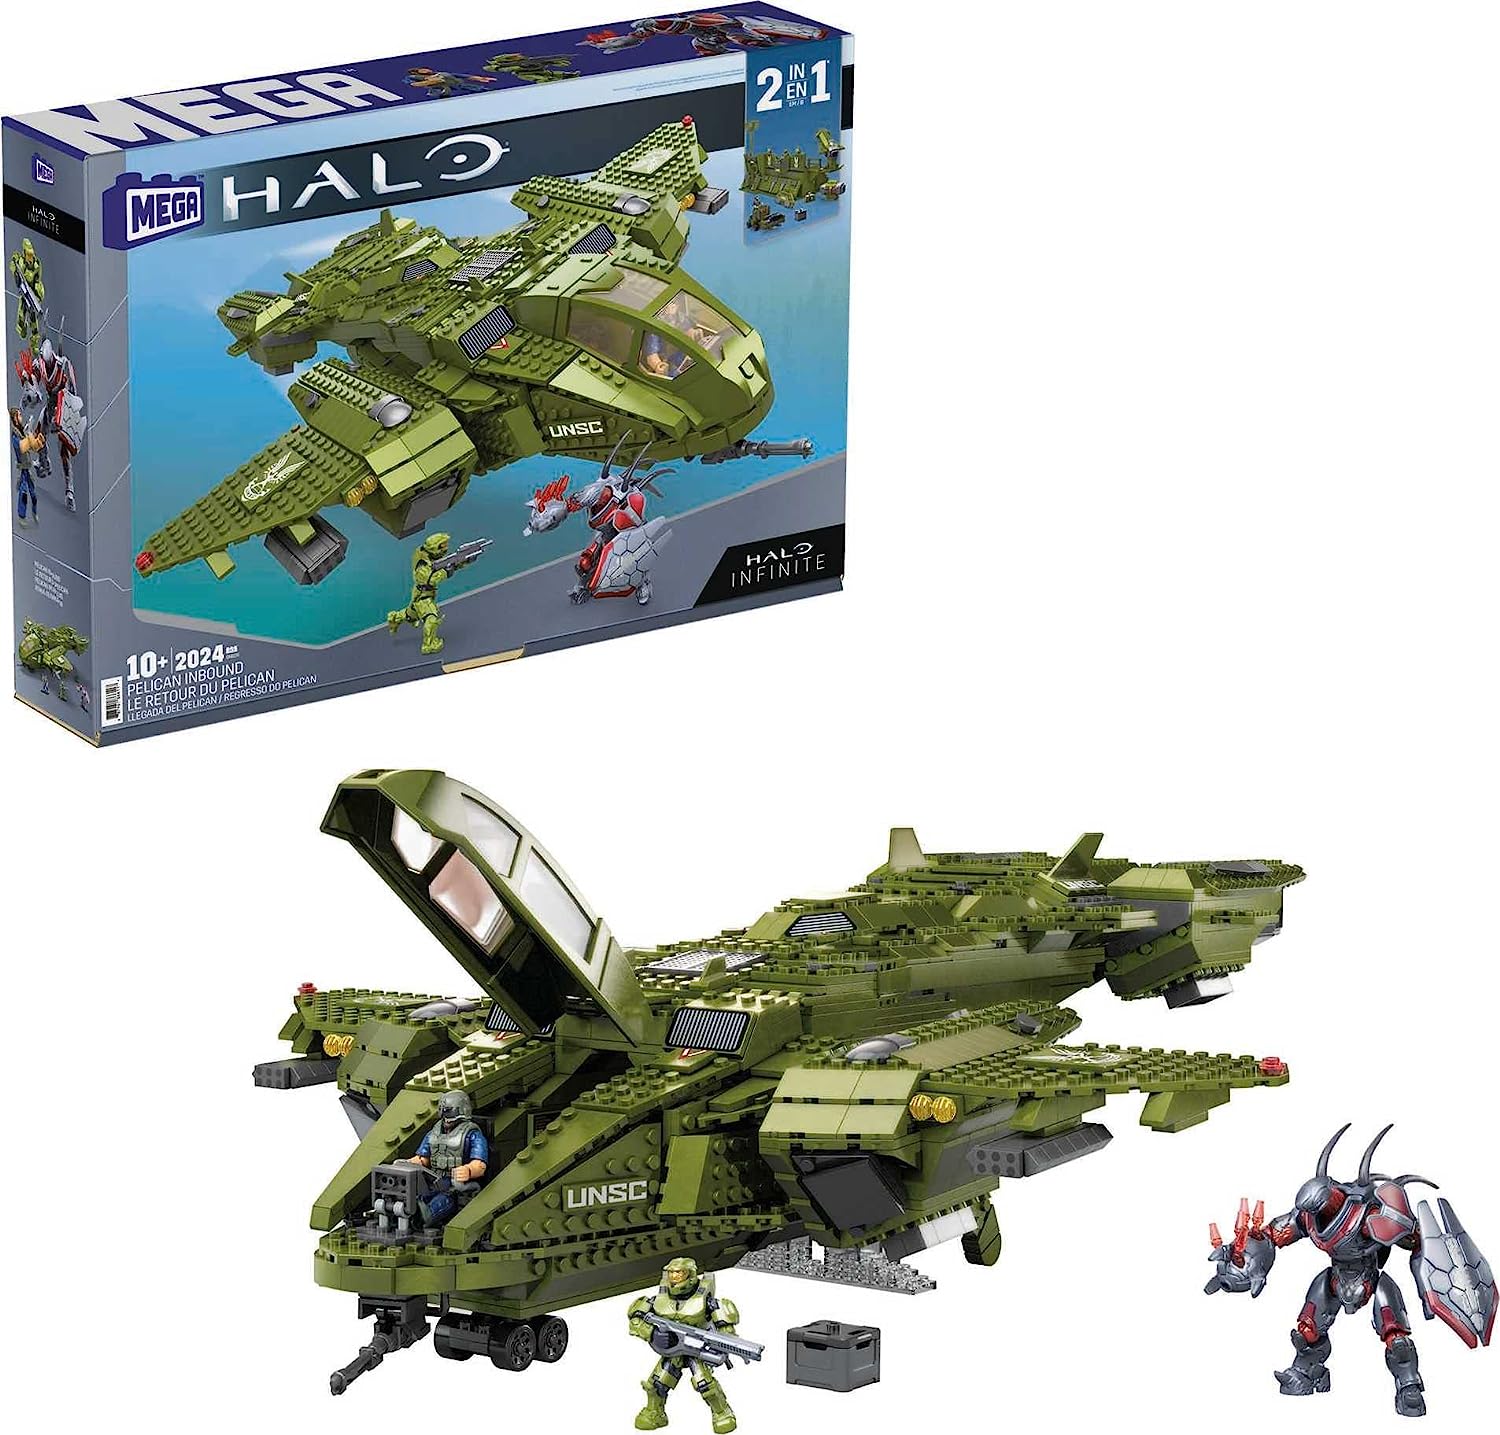 2024-Piece Mega Halo Infinite: Pelican Aircraft Building Set w/ 3 Mini Figure Toys & Accessories $91 + Free Shipping w/ Amazon Prime